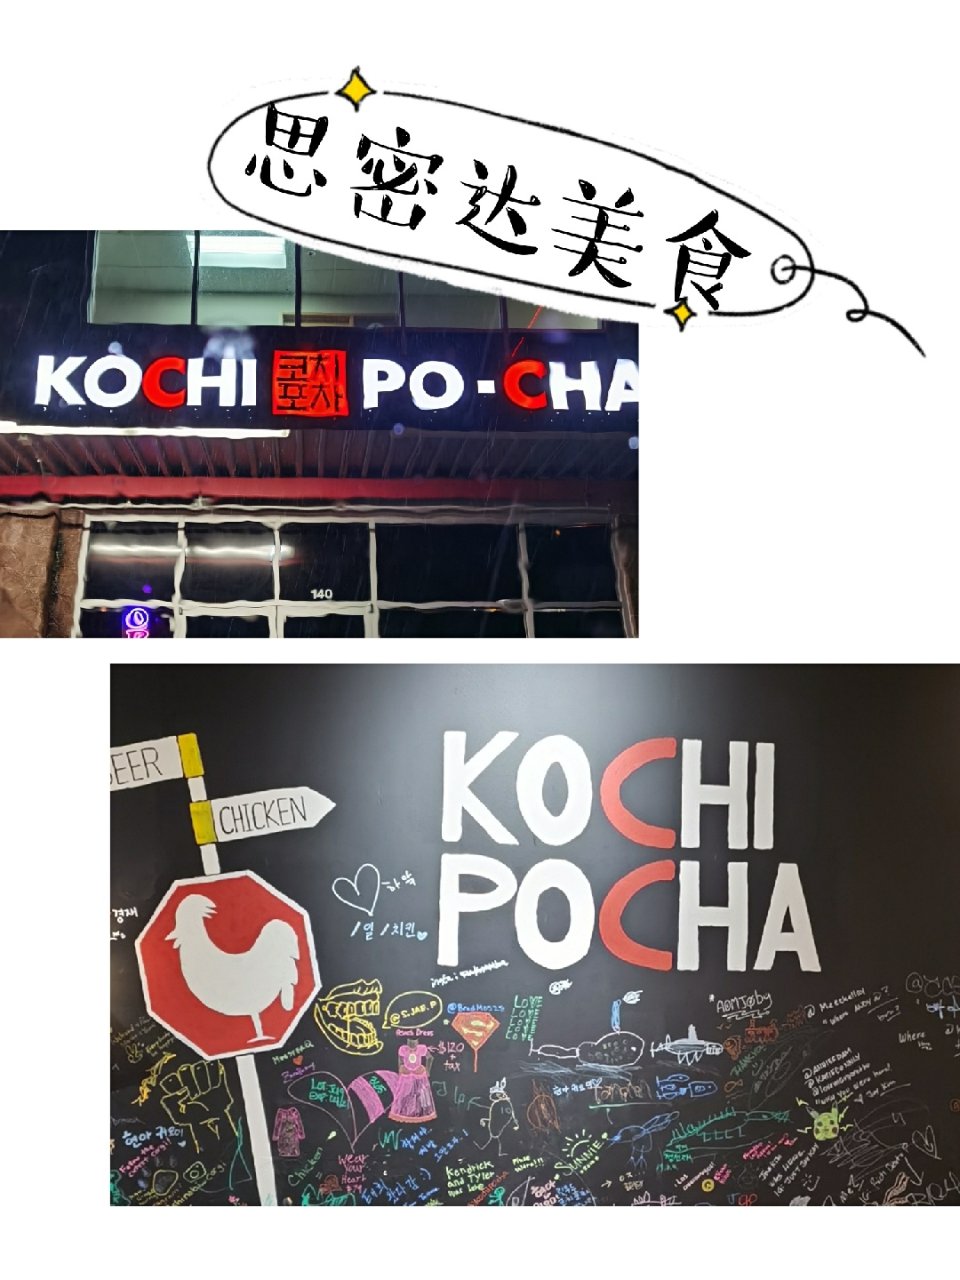 KOCHI-POCHA在西雅图也可以吃到...